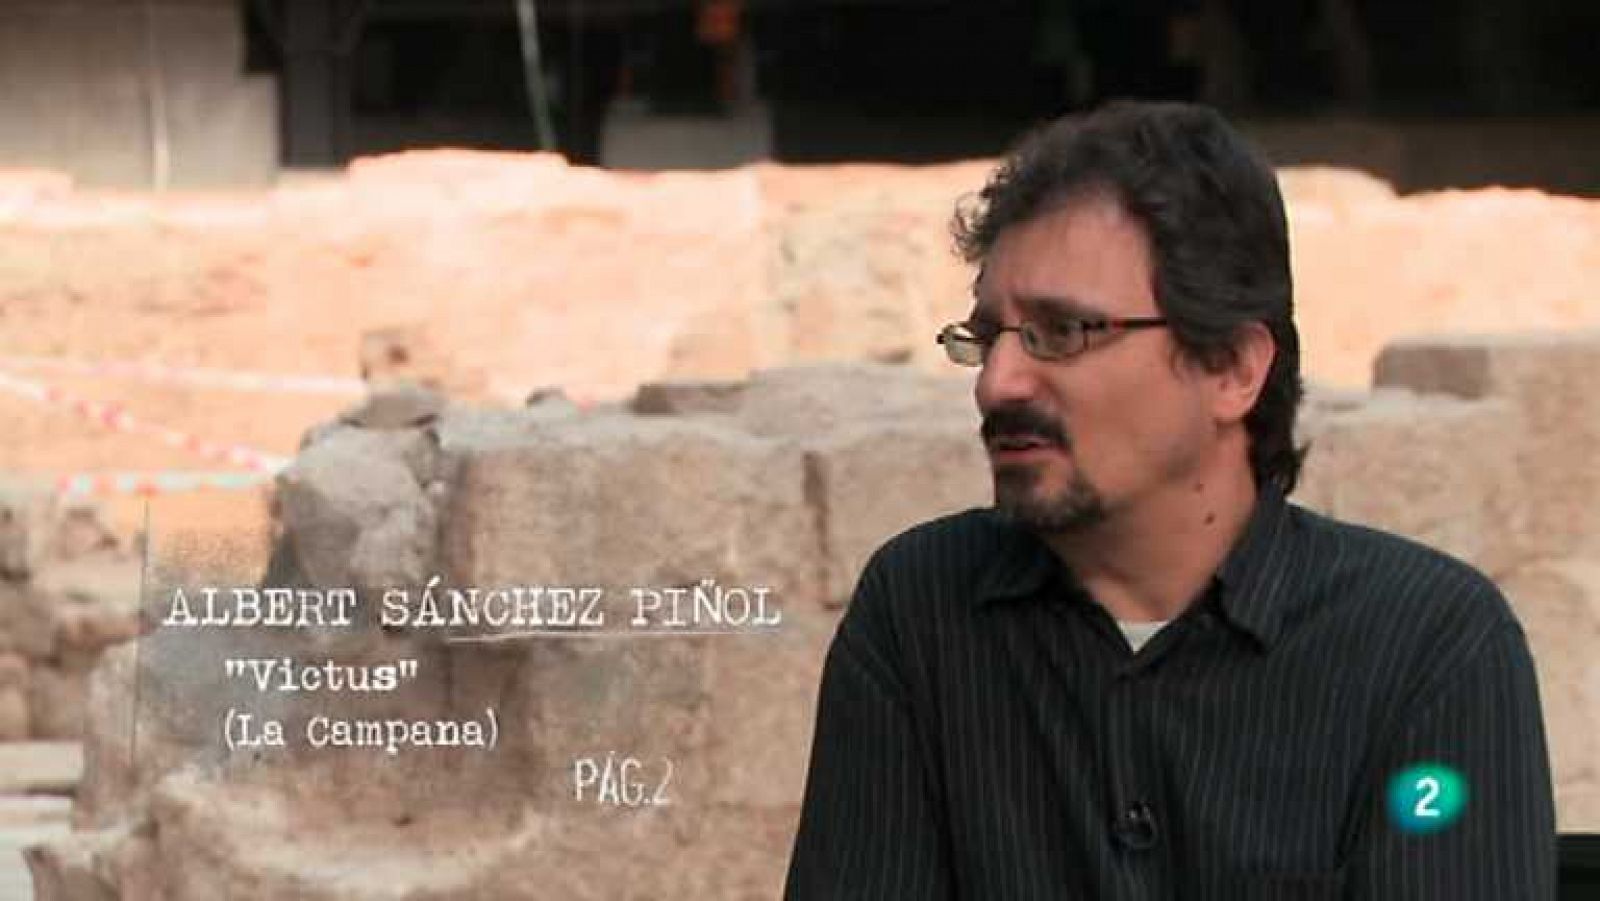 Página 2 - Albert Sánchez Piñol - 21/10/2012